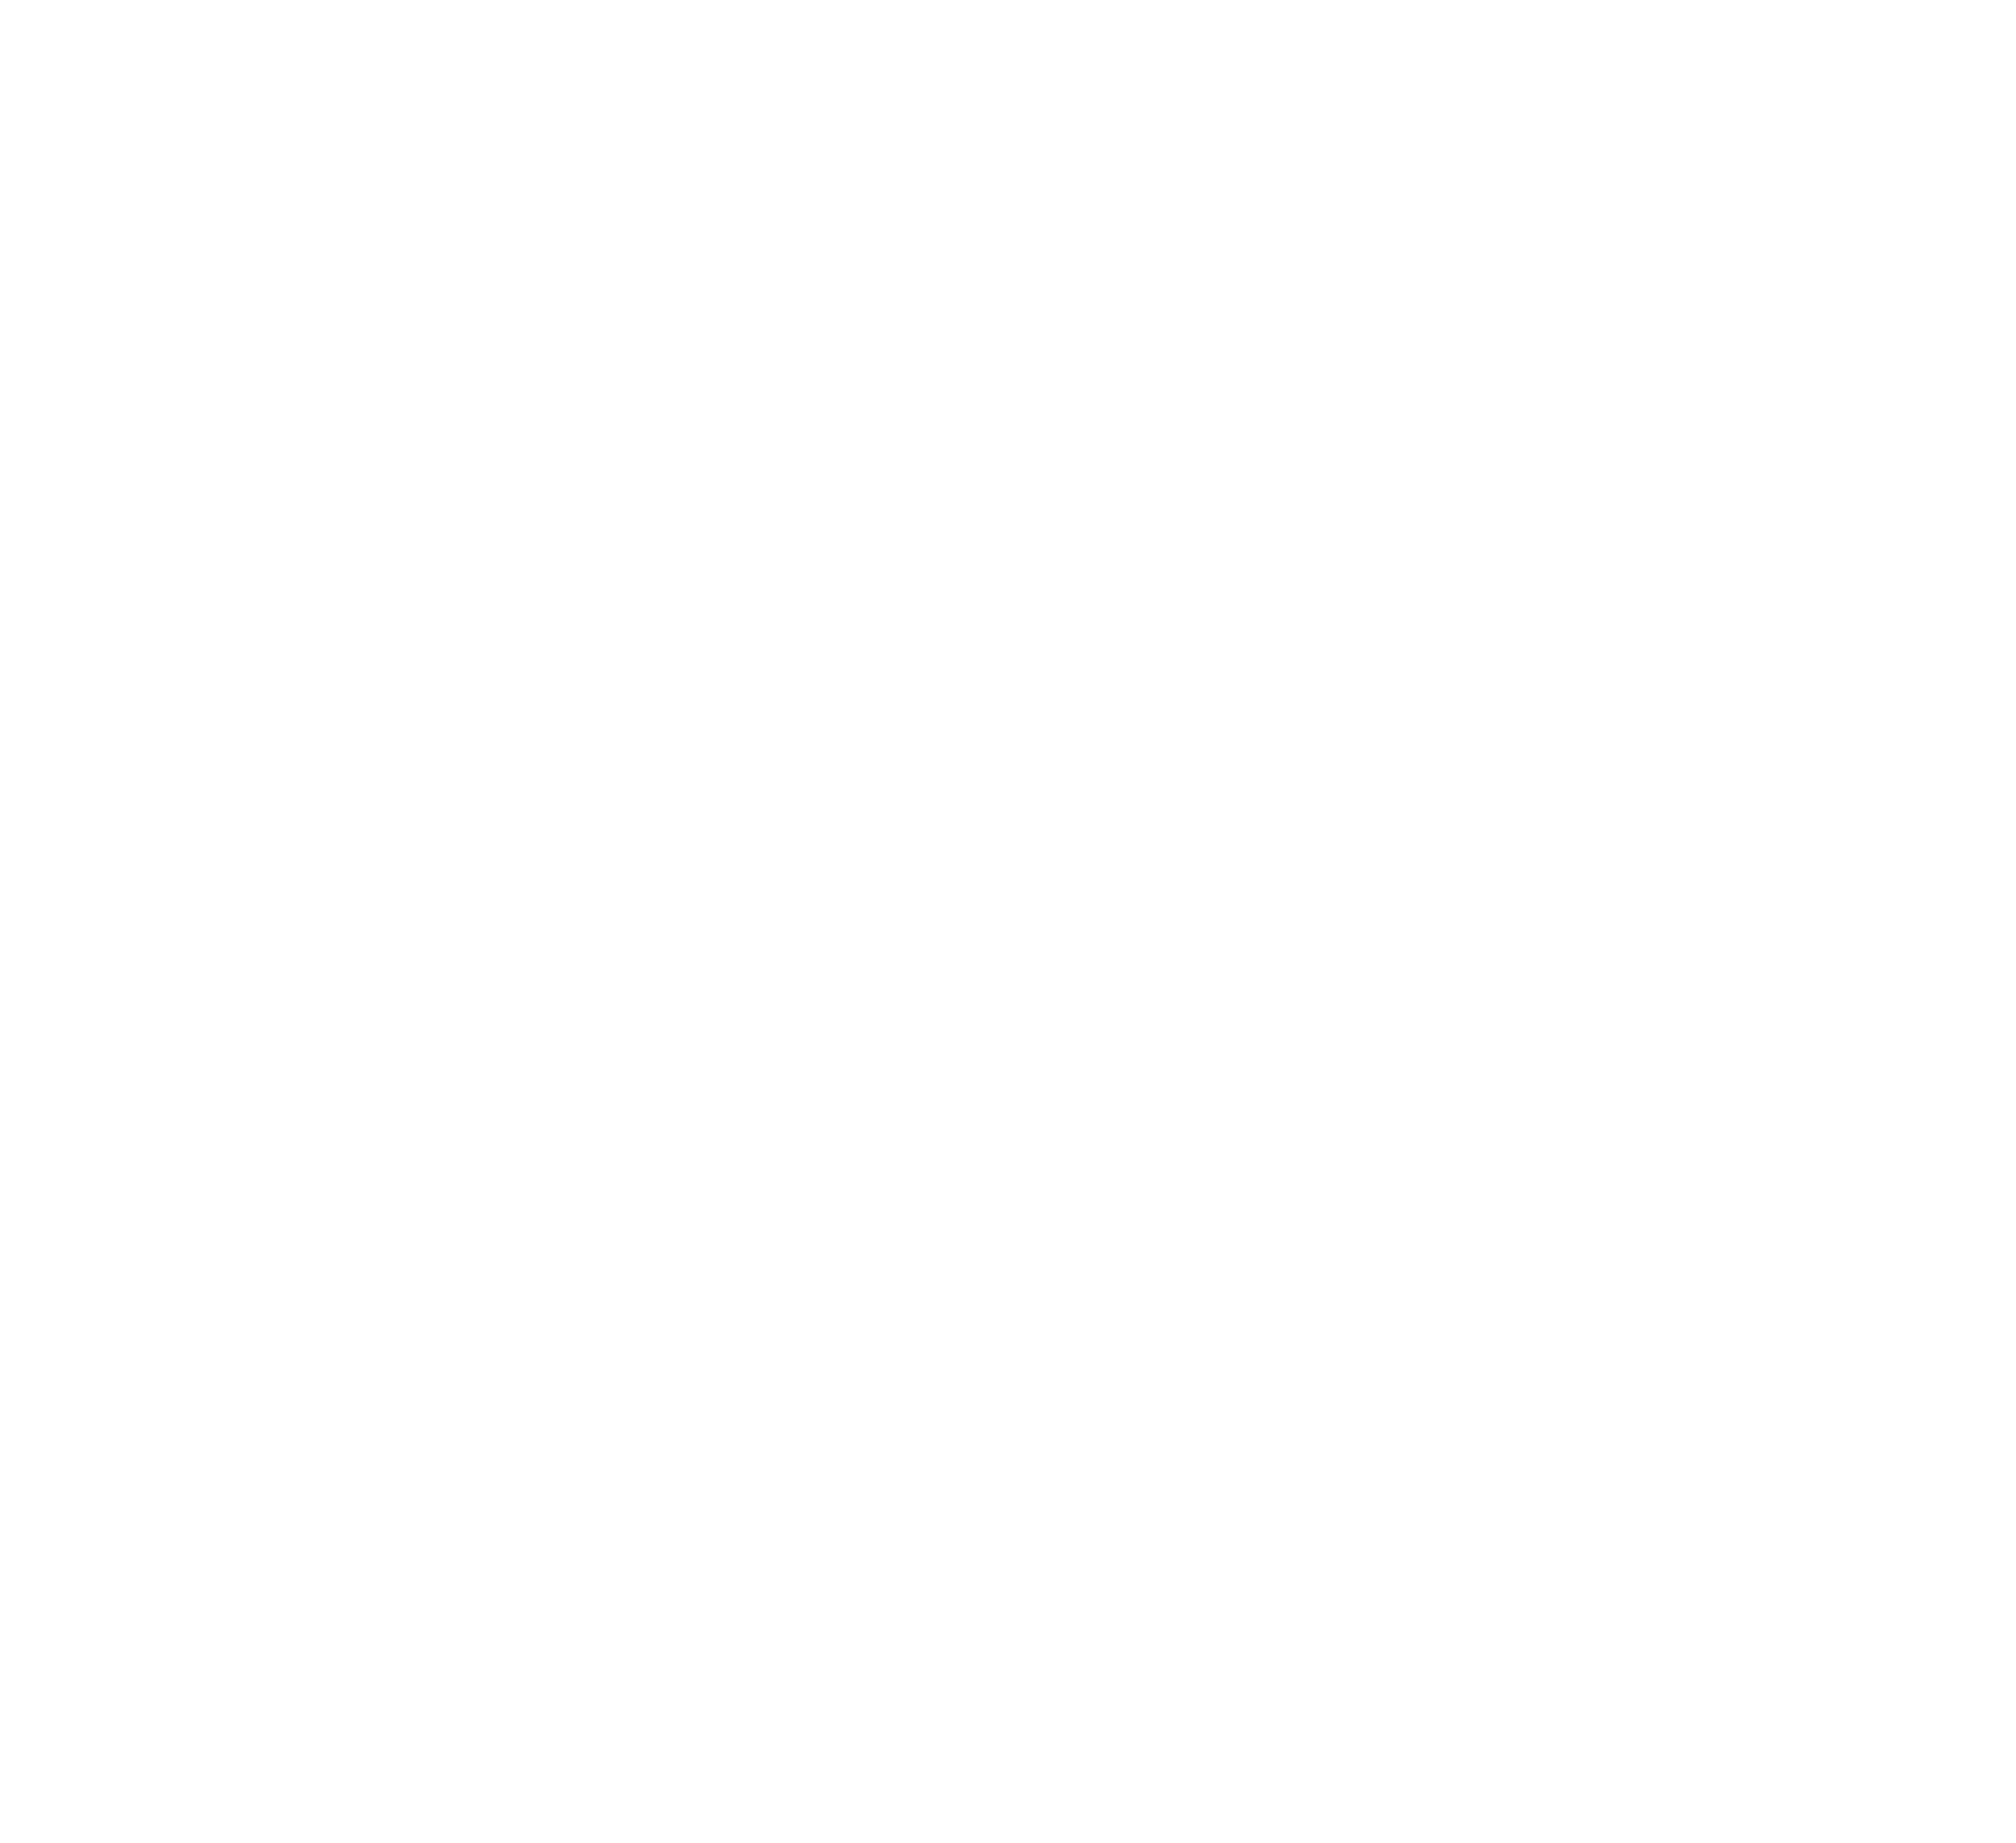 Barbershop Ramo